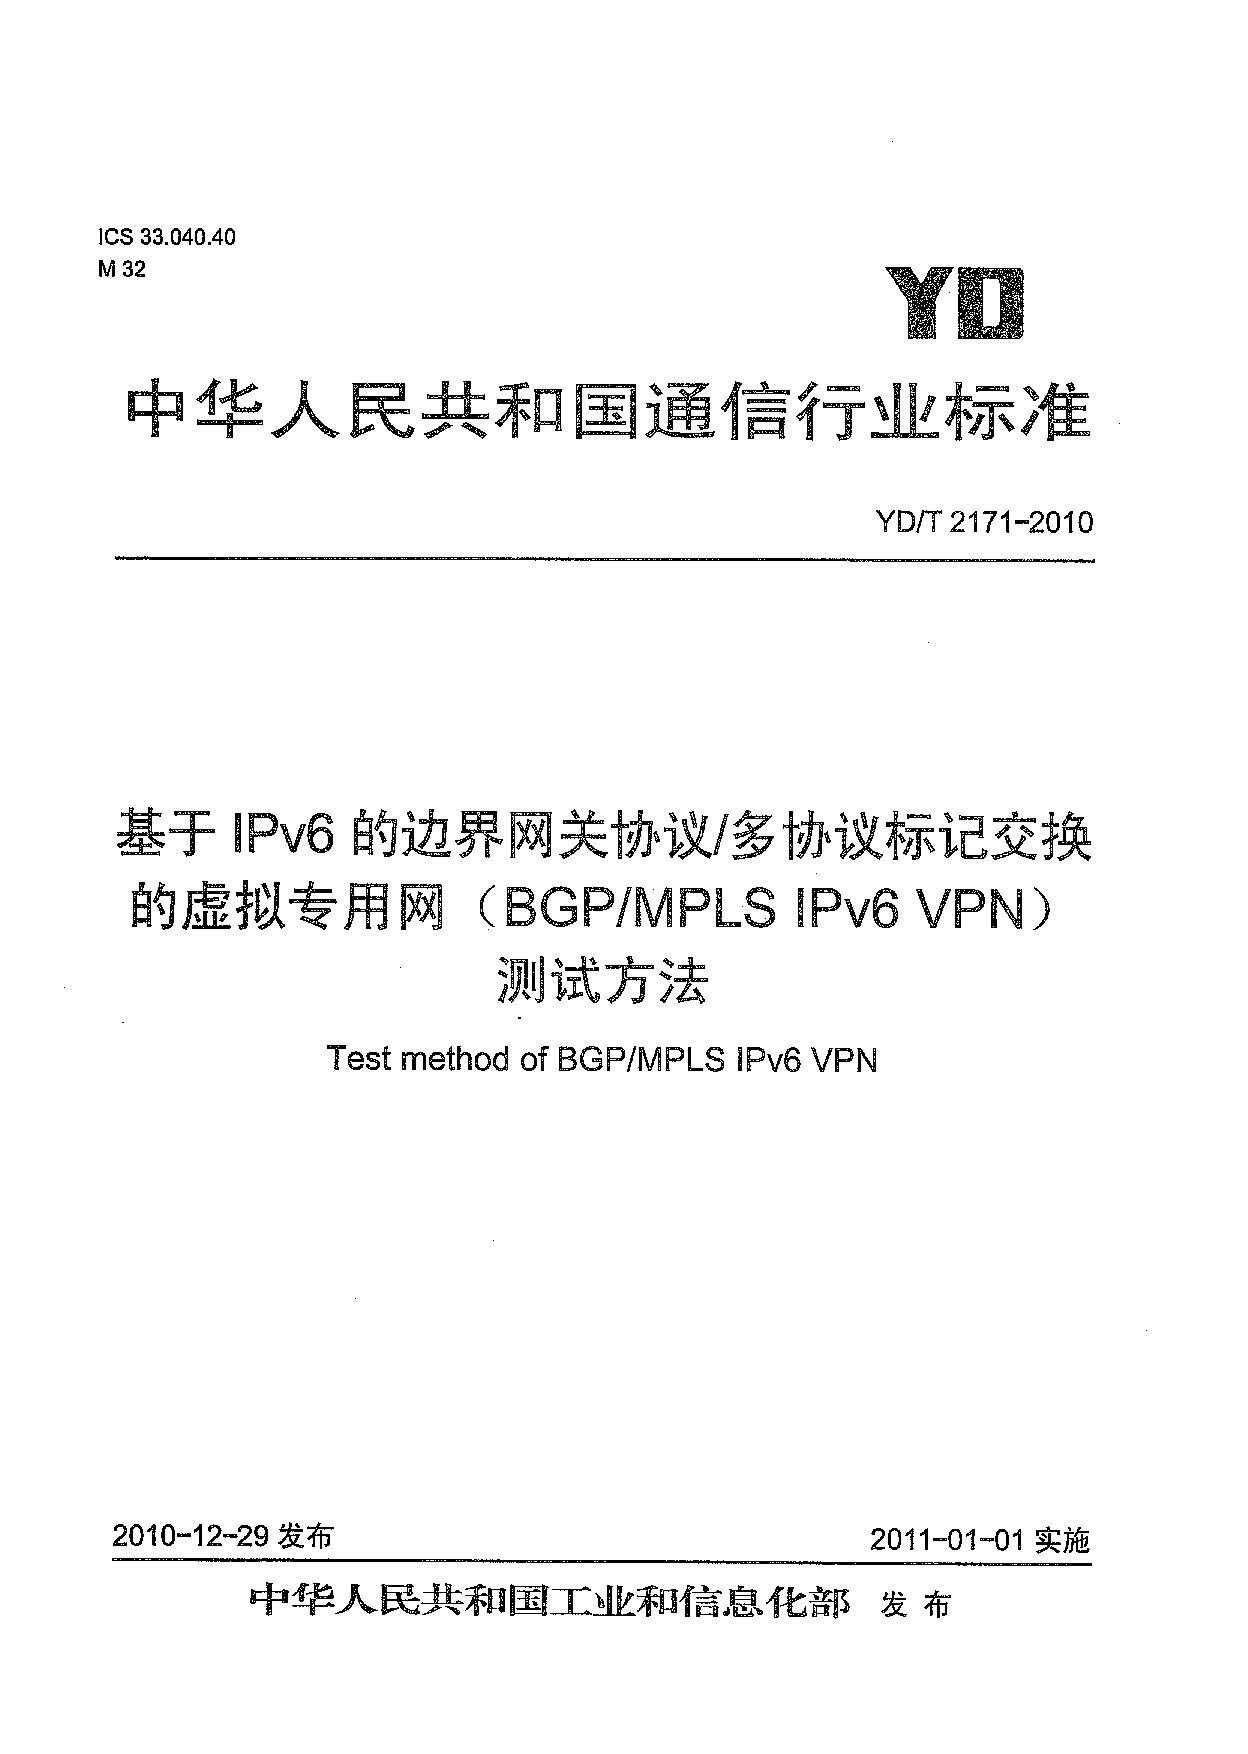 YD/T 2171-2010封面图